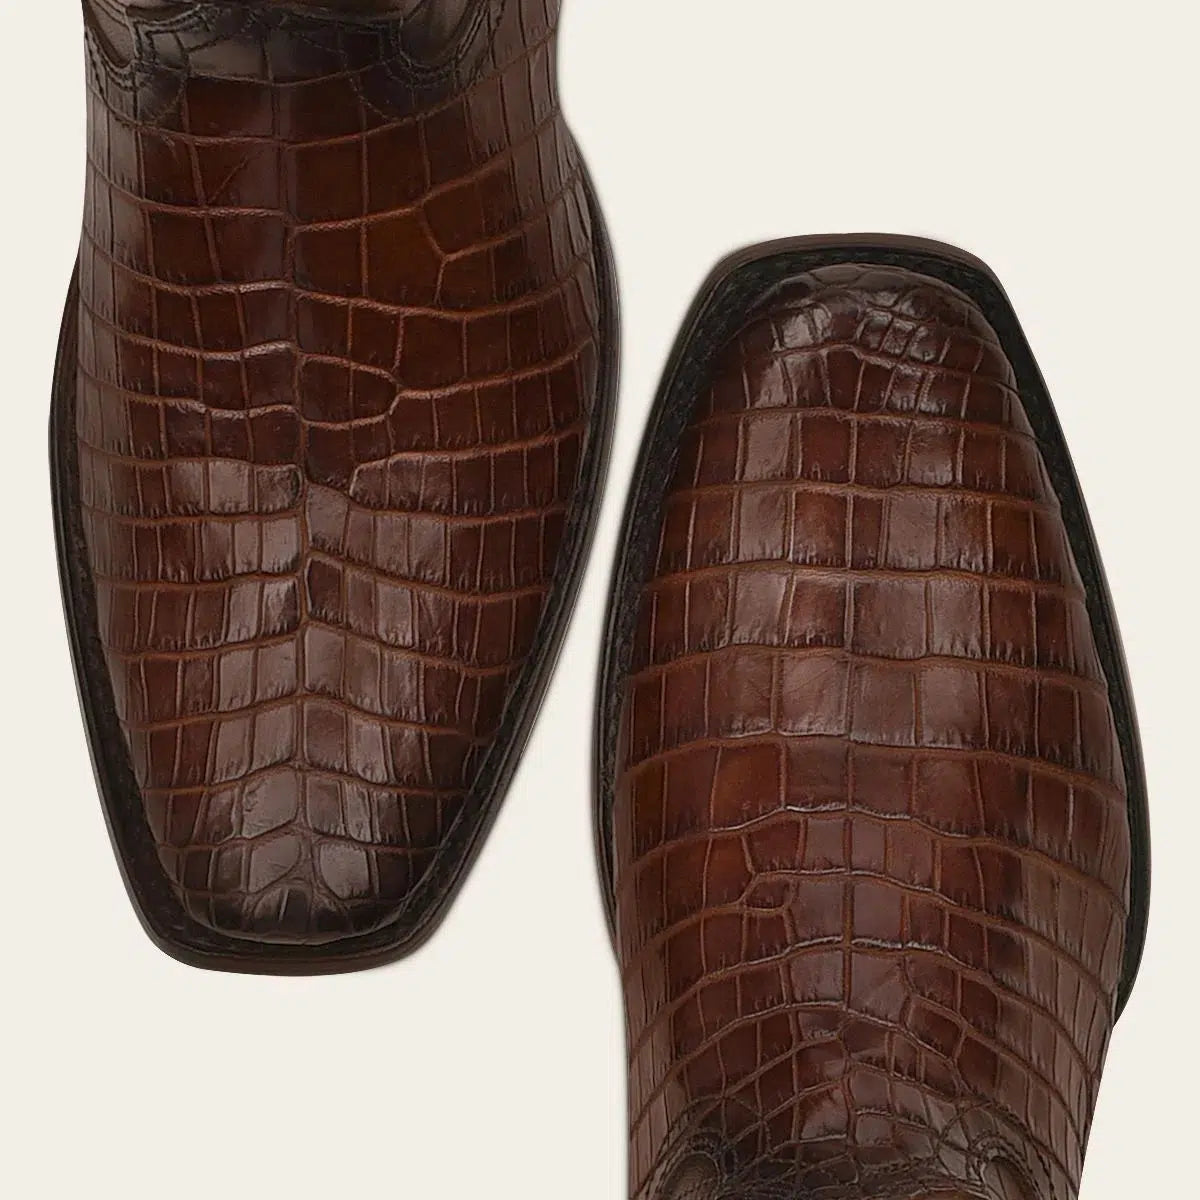 1J2PMB - Cuadra brown western cowboy moreleti leather boots for men